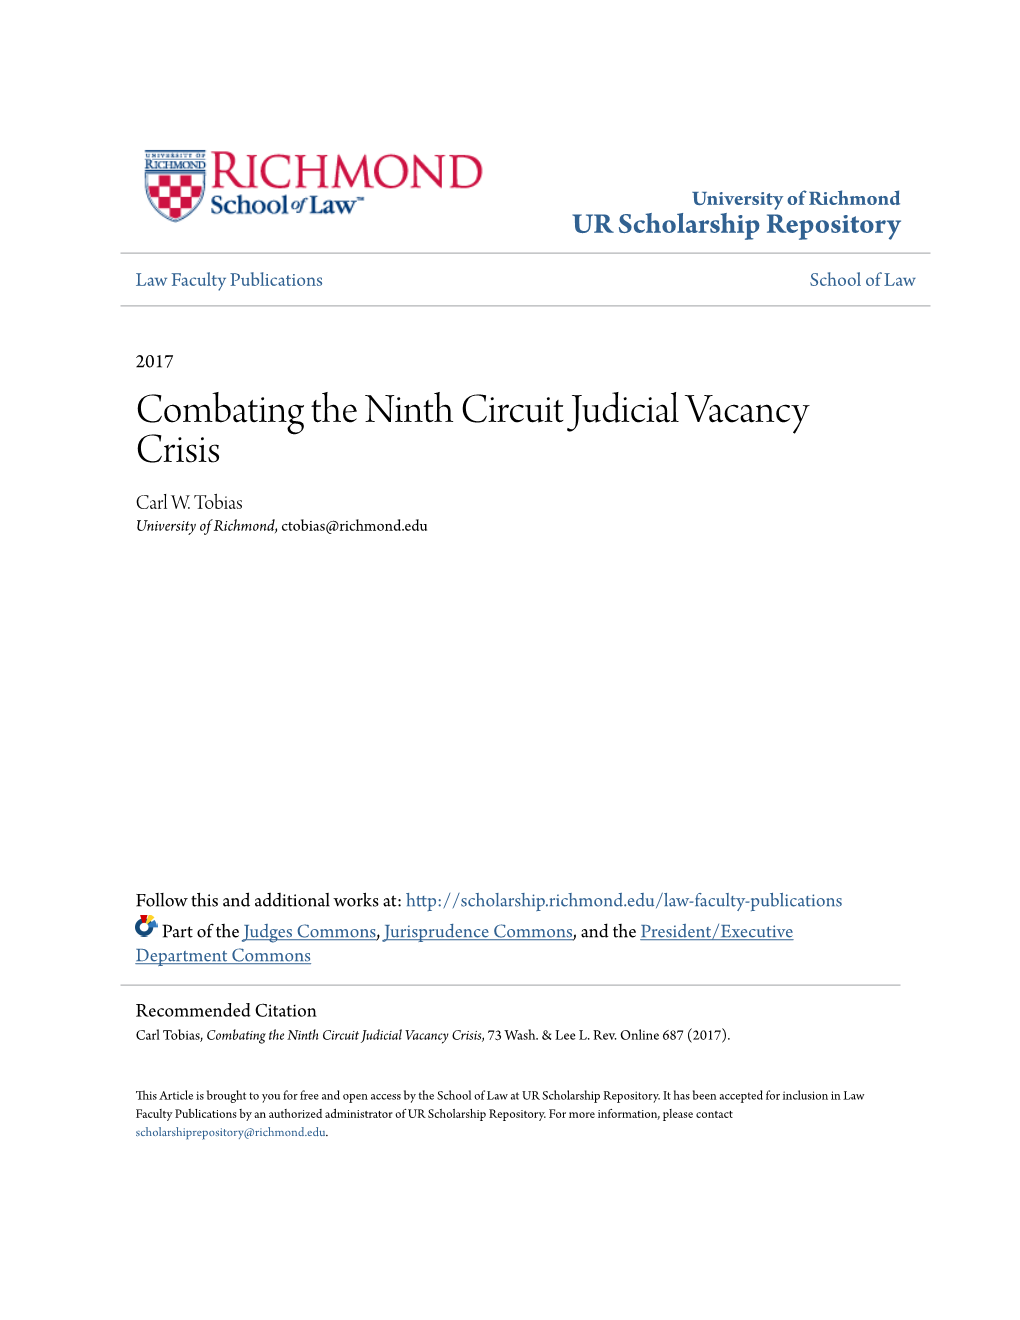 Combating the Ninth Circuit Judicial Vacancy Crisis Carl W